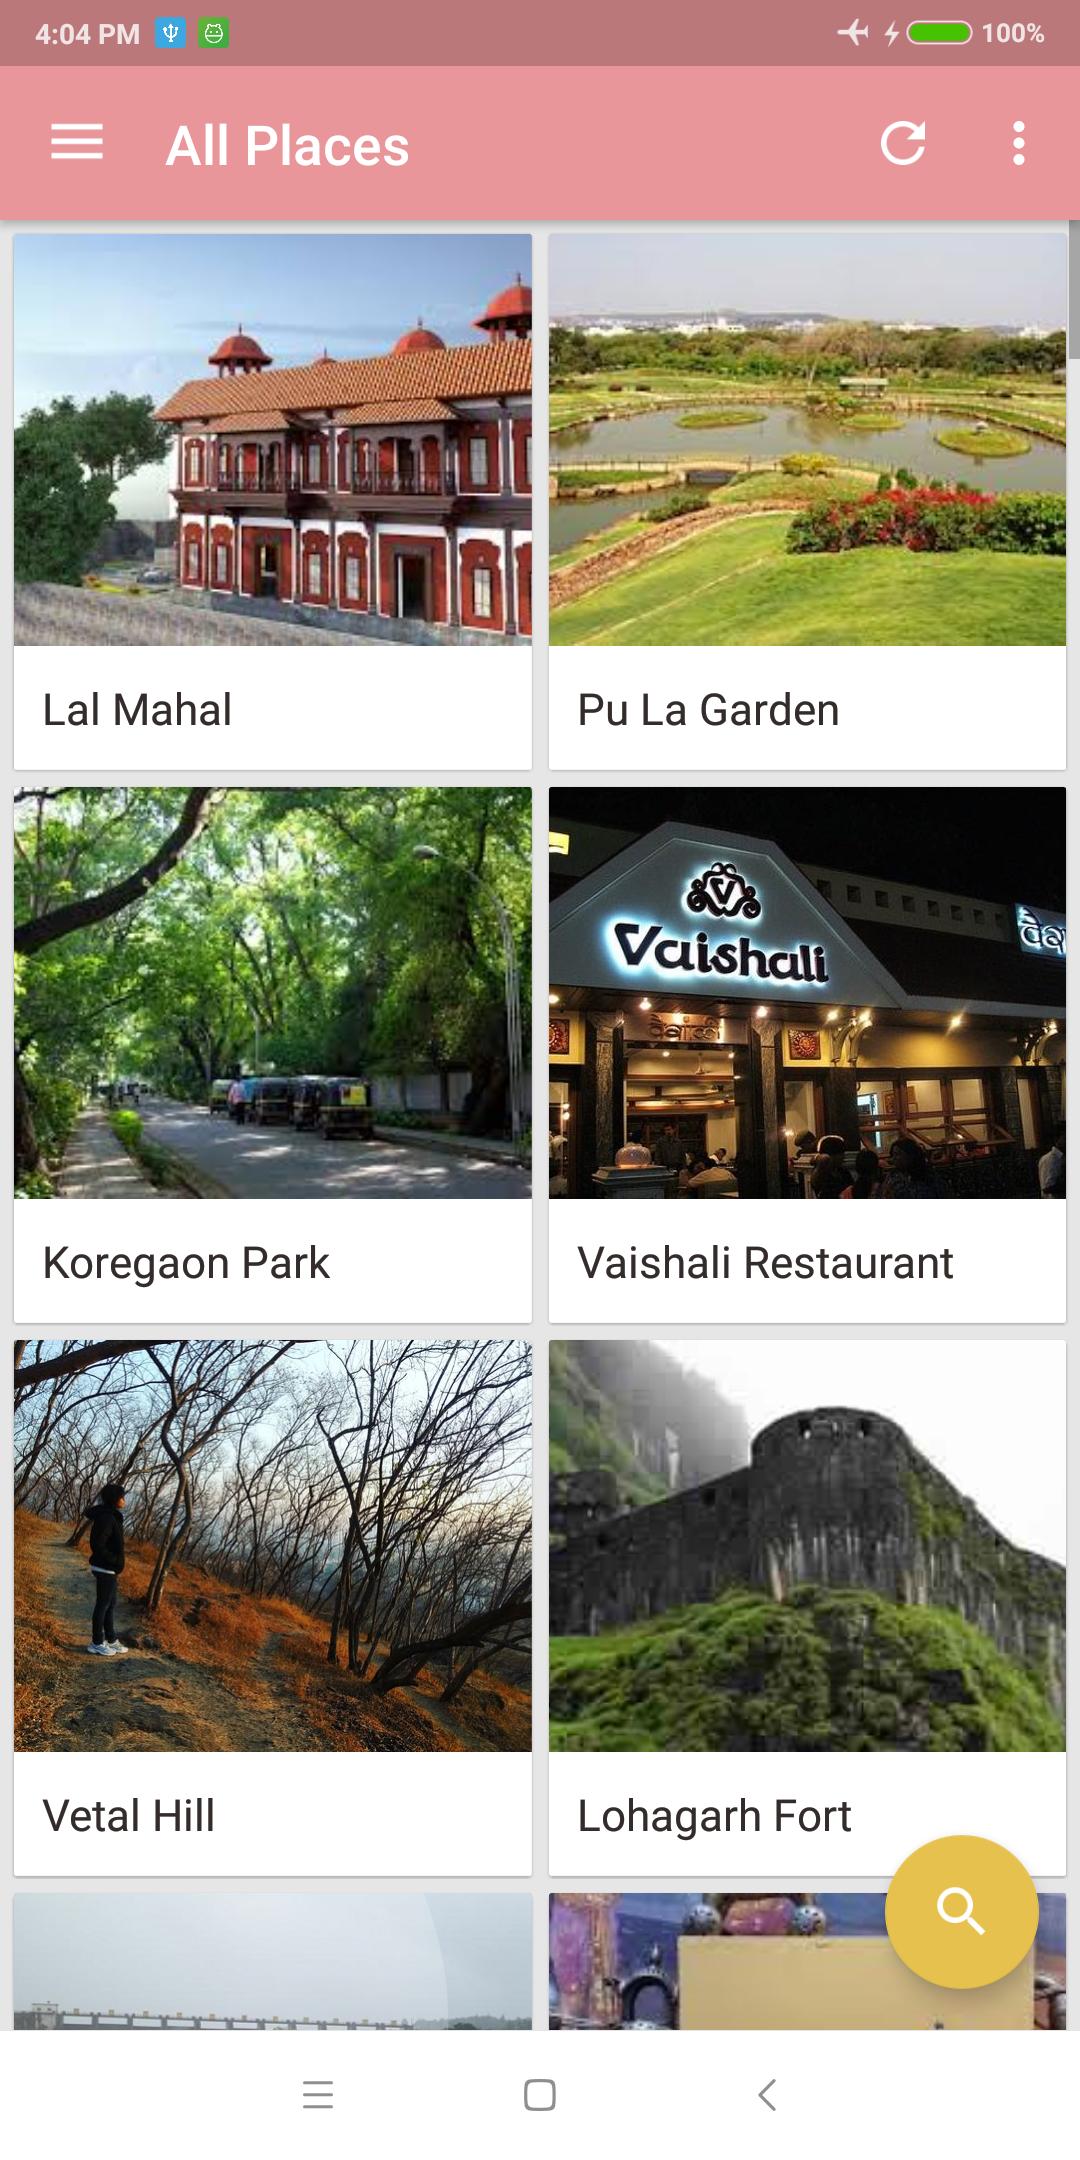 maharashtra tourism app